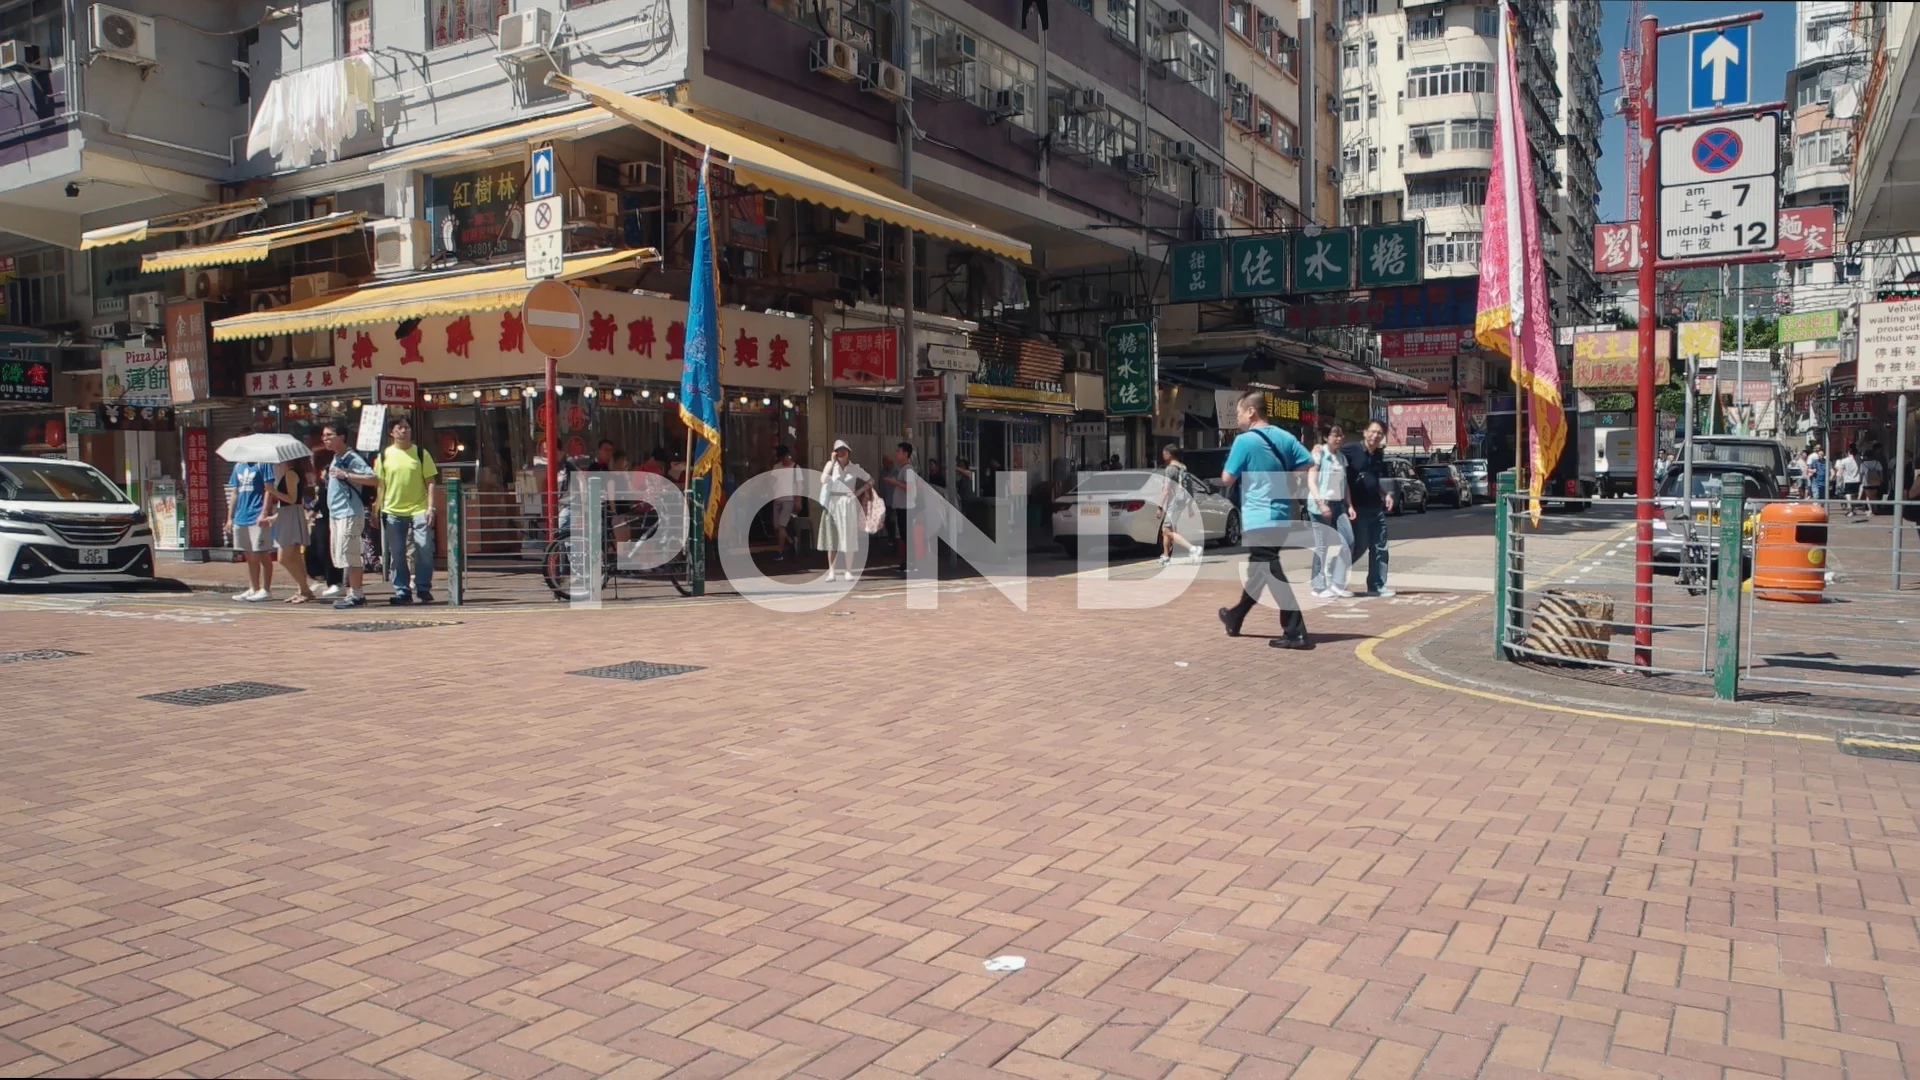 Hong Kong Street View 4K - Canton Road - Tsim Sha Tsui 